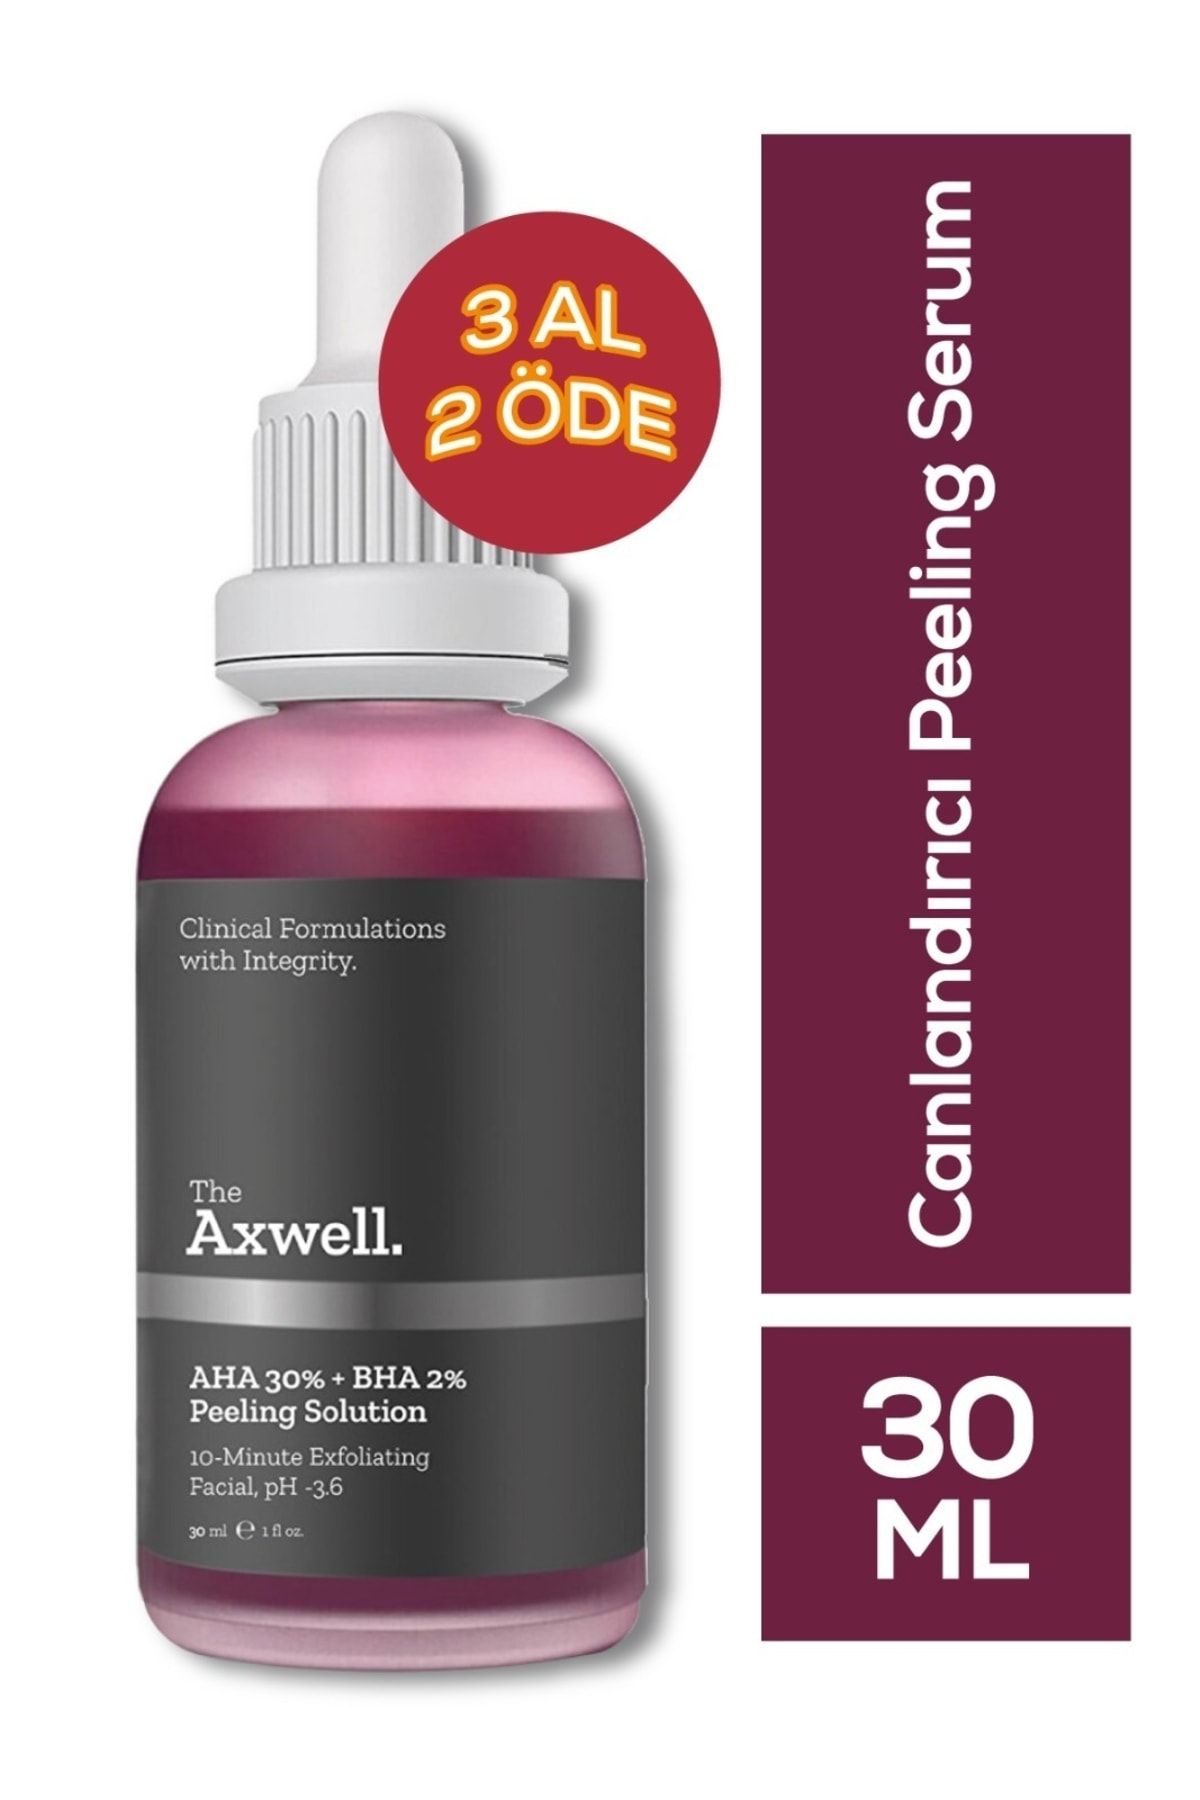 AXWELL Canlandırıcı & Cilt Tonu Eşitleyici Yüz Peeling Serum 30 ml Aha 30% + Bha 2%